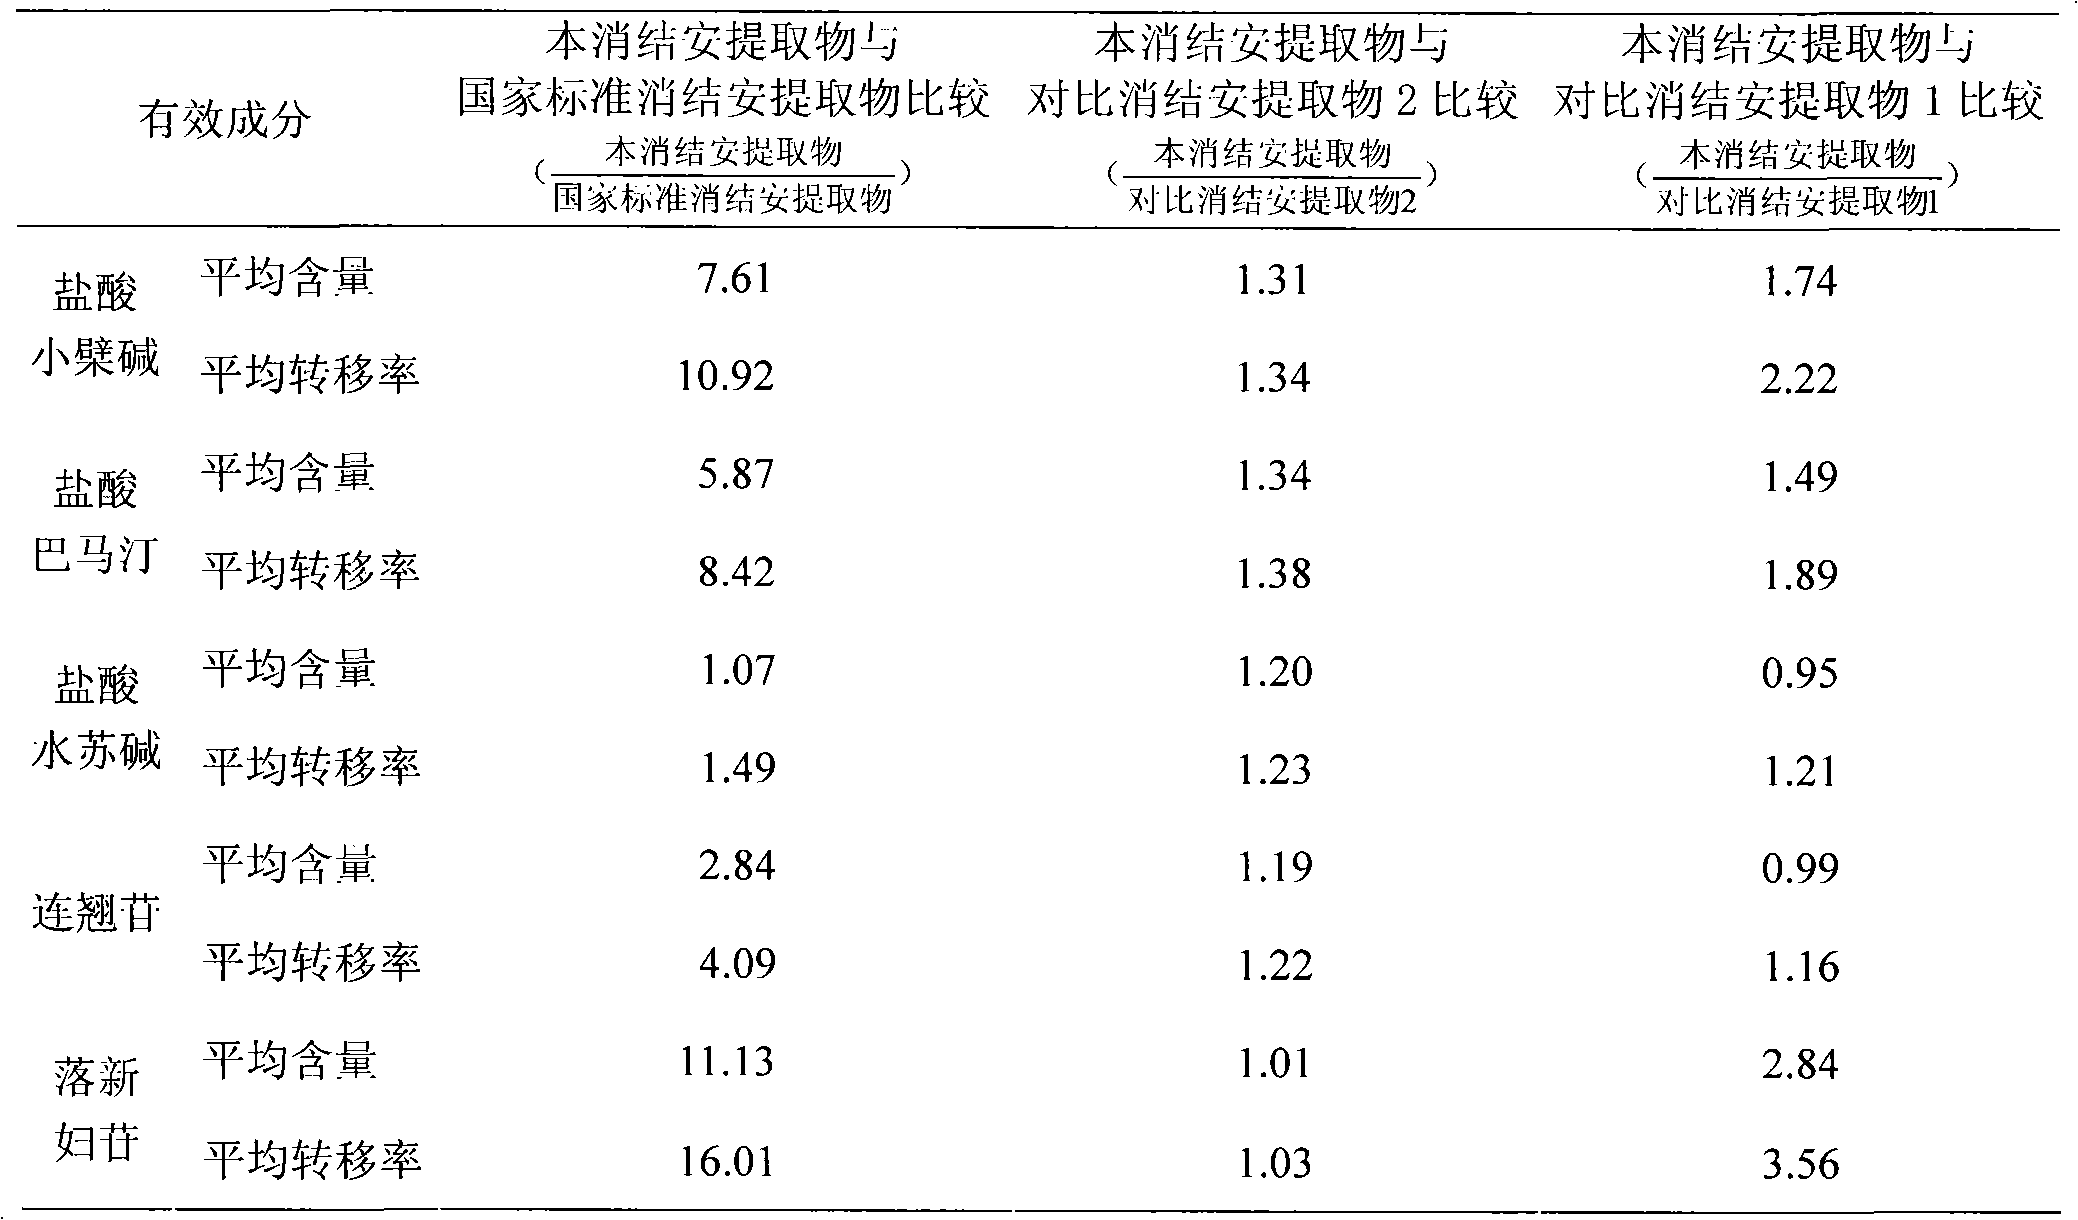 Preparation method of Xiaojiean extract